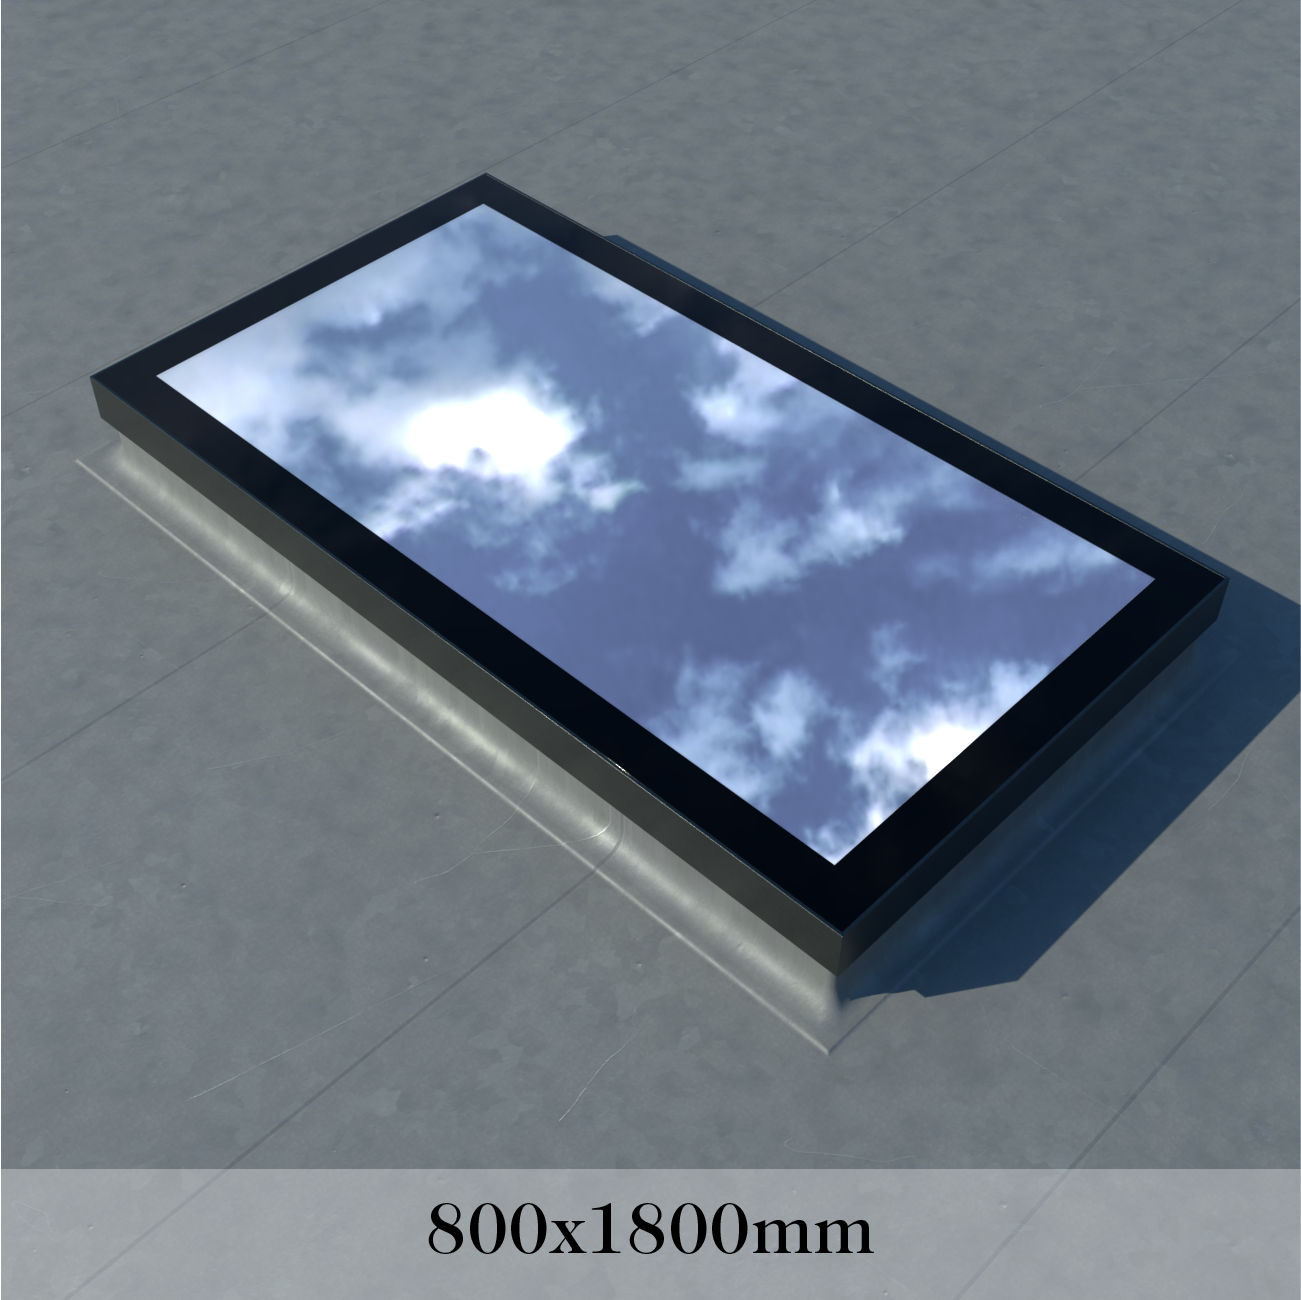 Framed Skylight 800 x 1800 mm – Triple glazed